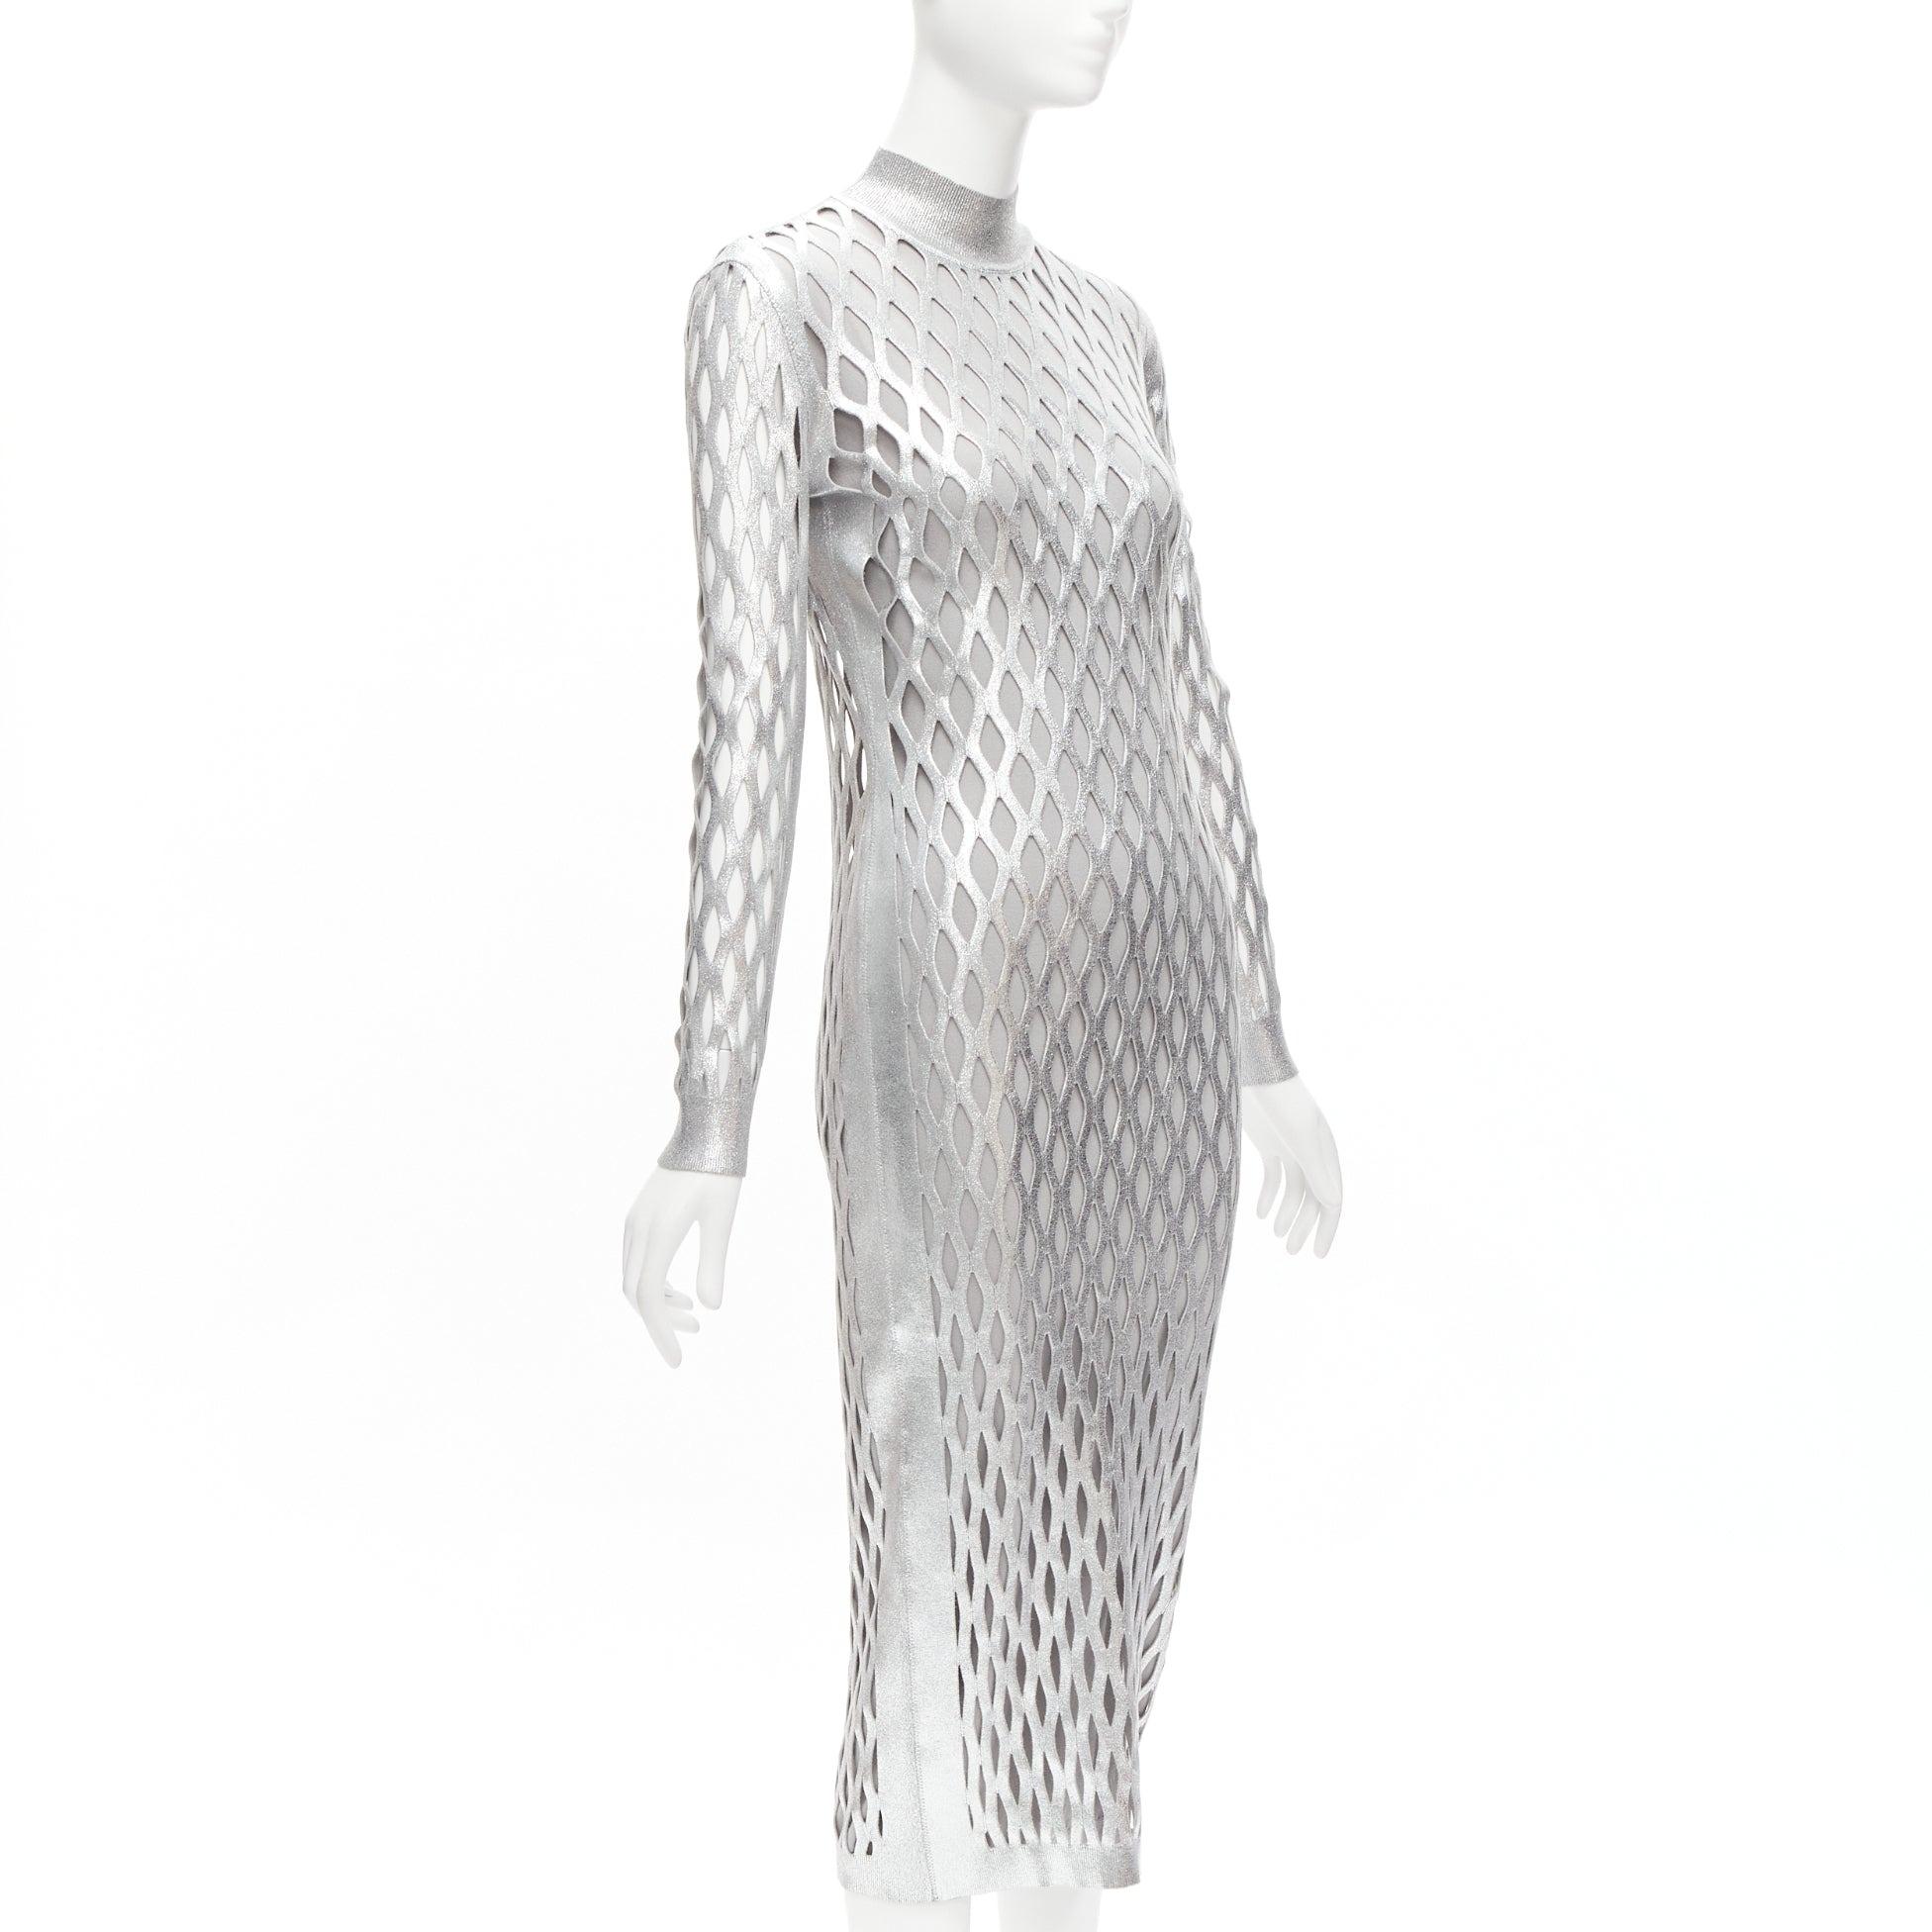 Silver new FENDI Nicki Minaj 2019 Runway Abito silver net cut out lined dress IT42 M For Sale